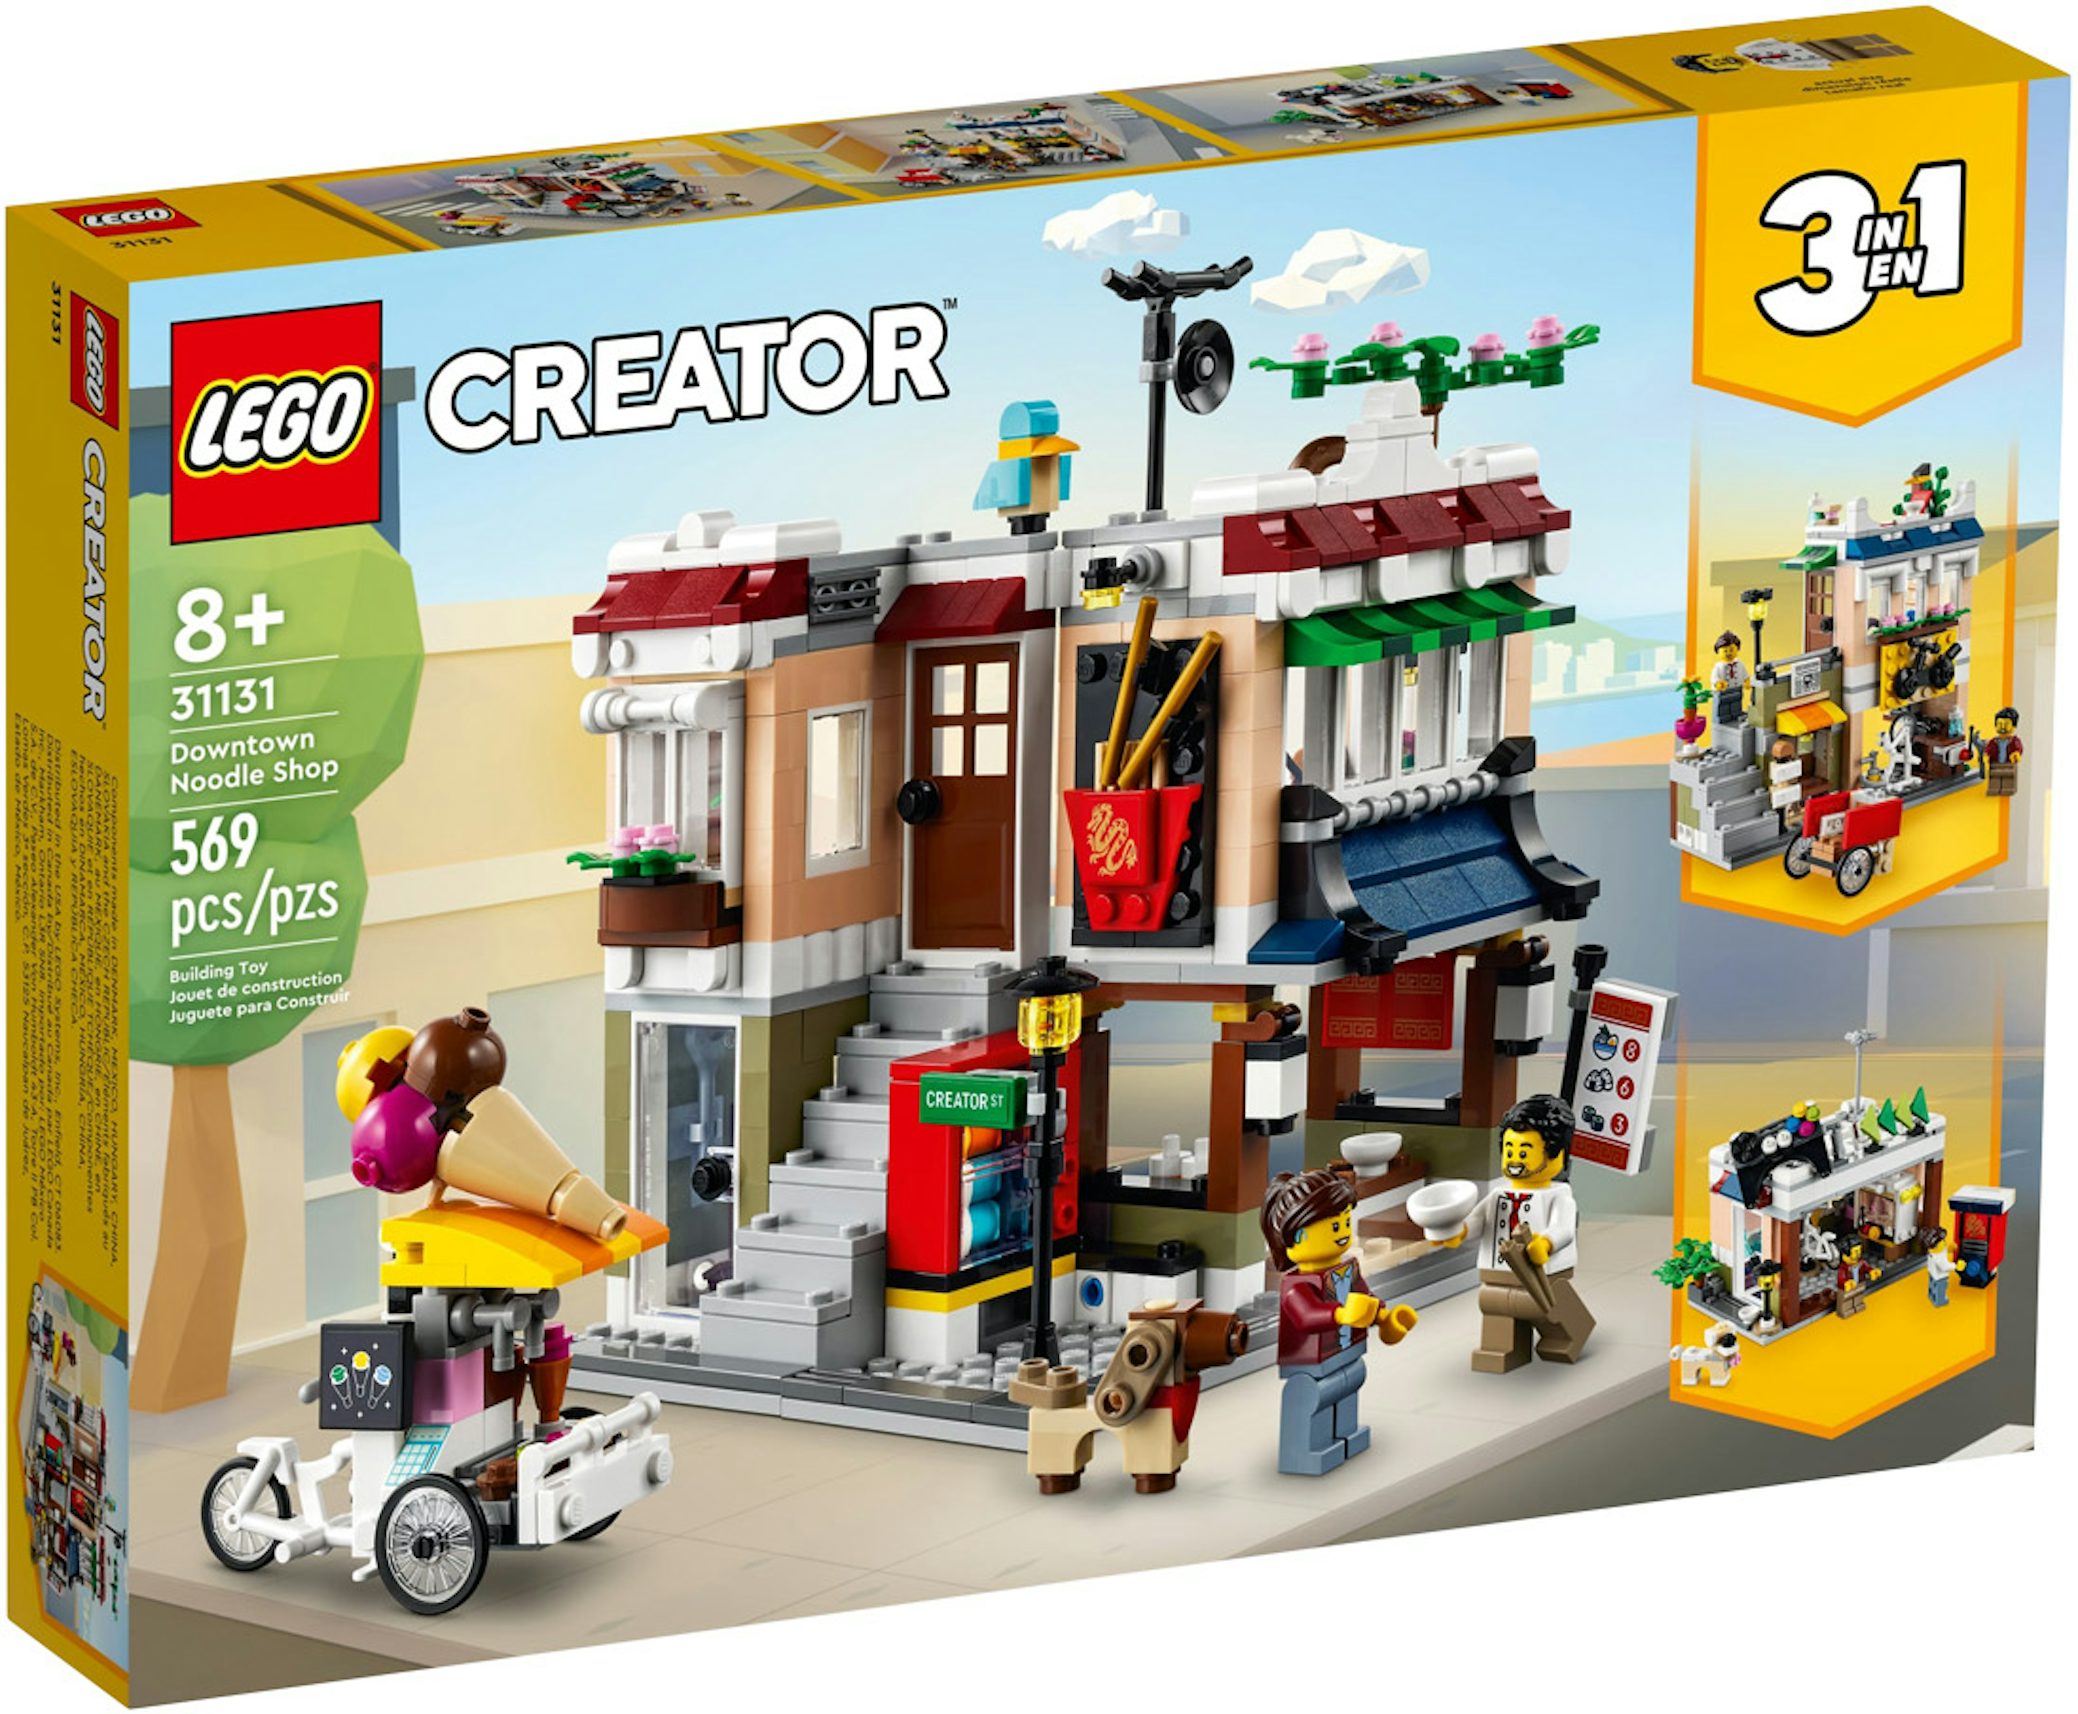 https://images.stockx.com/images/LEGO-Creator-3-in-1-Downtown-Noodle-Shop-Set-31131.jpg?fit=fill&bg=FFFFFF&w=1200&h=857&fm=jpg&auto=compress&dpr=2&trim=color&updated_at=1653577325&q=60